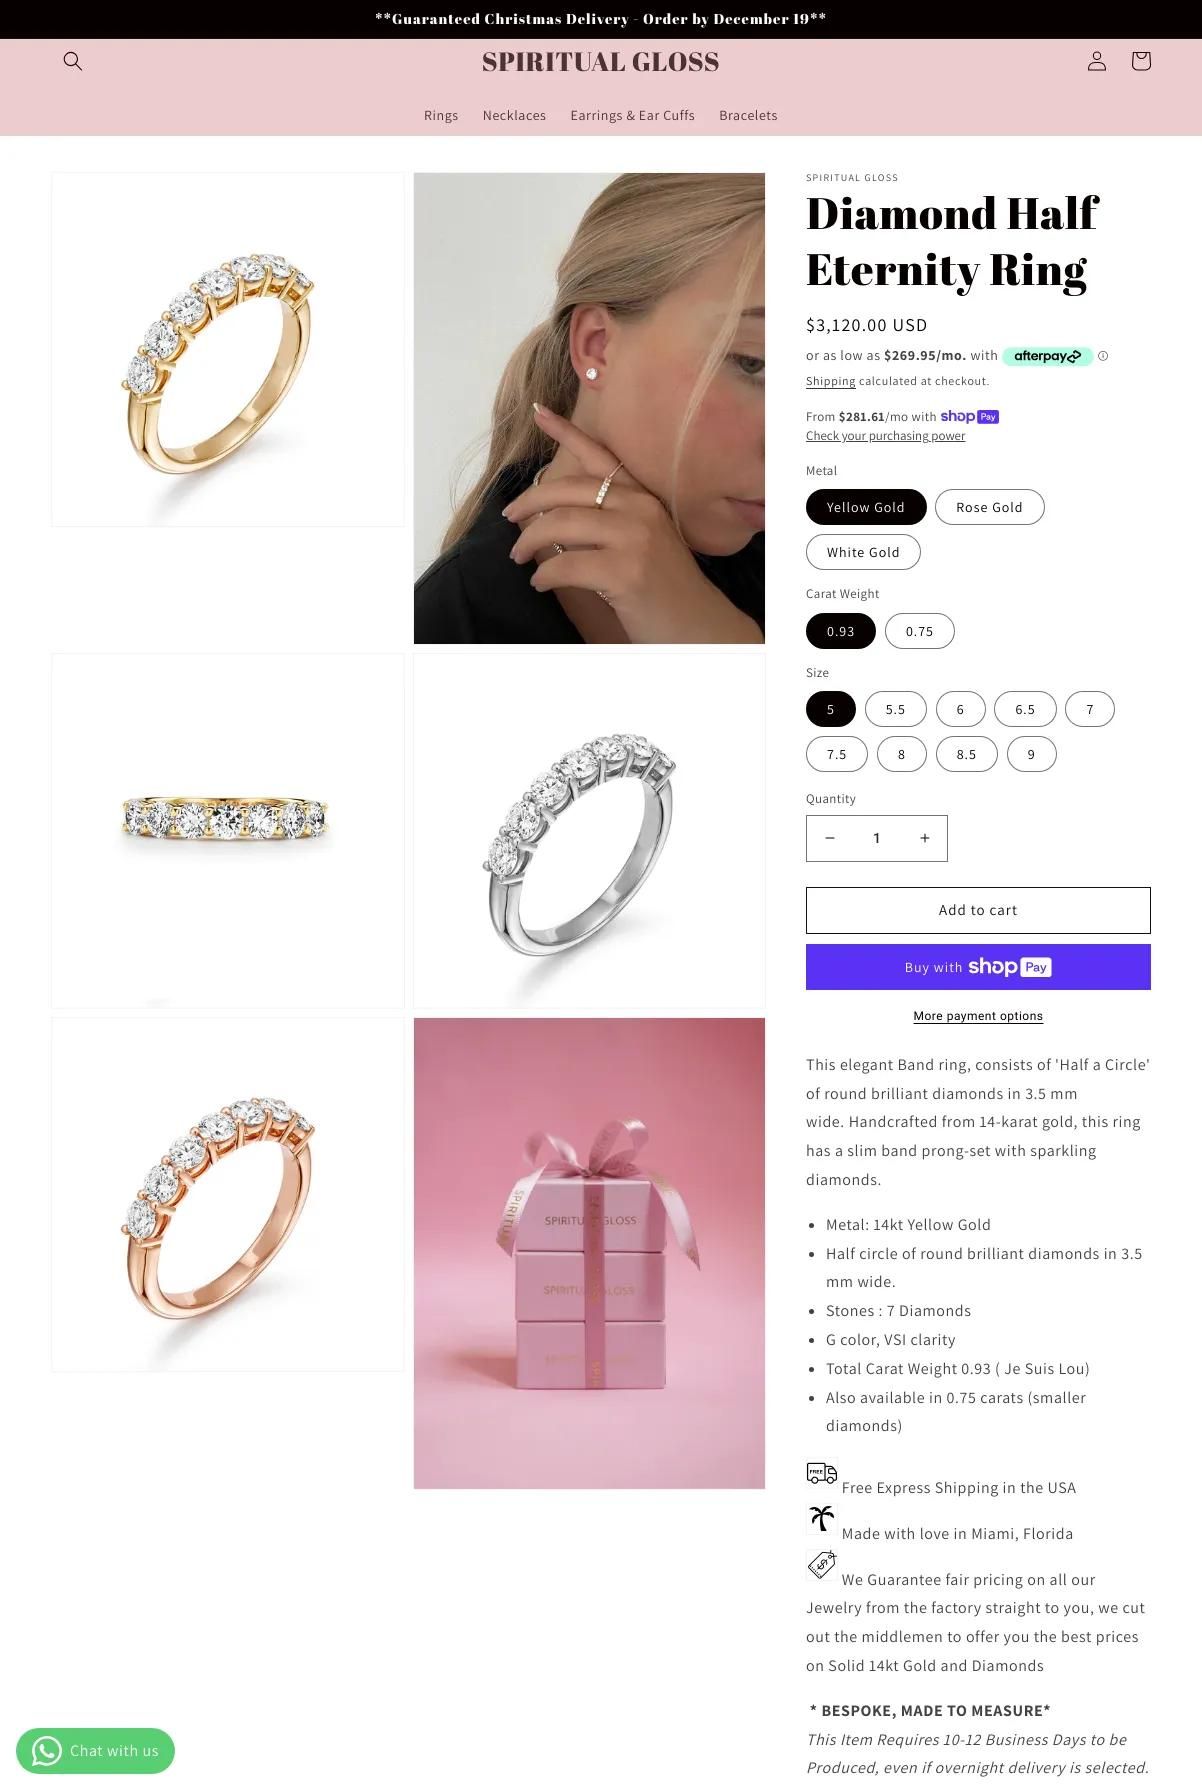 Screenshot 3 of Spiritual Gloss (Example Shopify Jewelry Website)